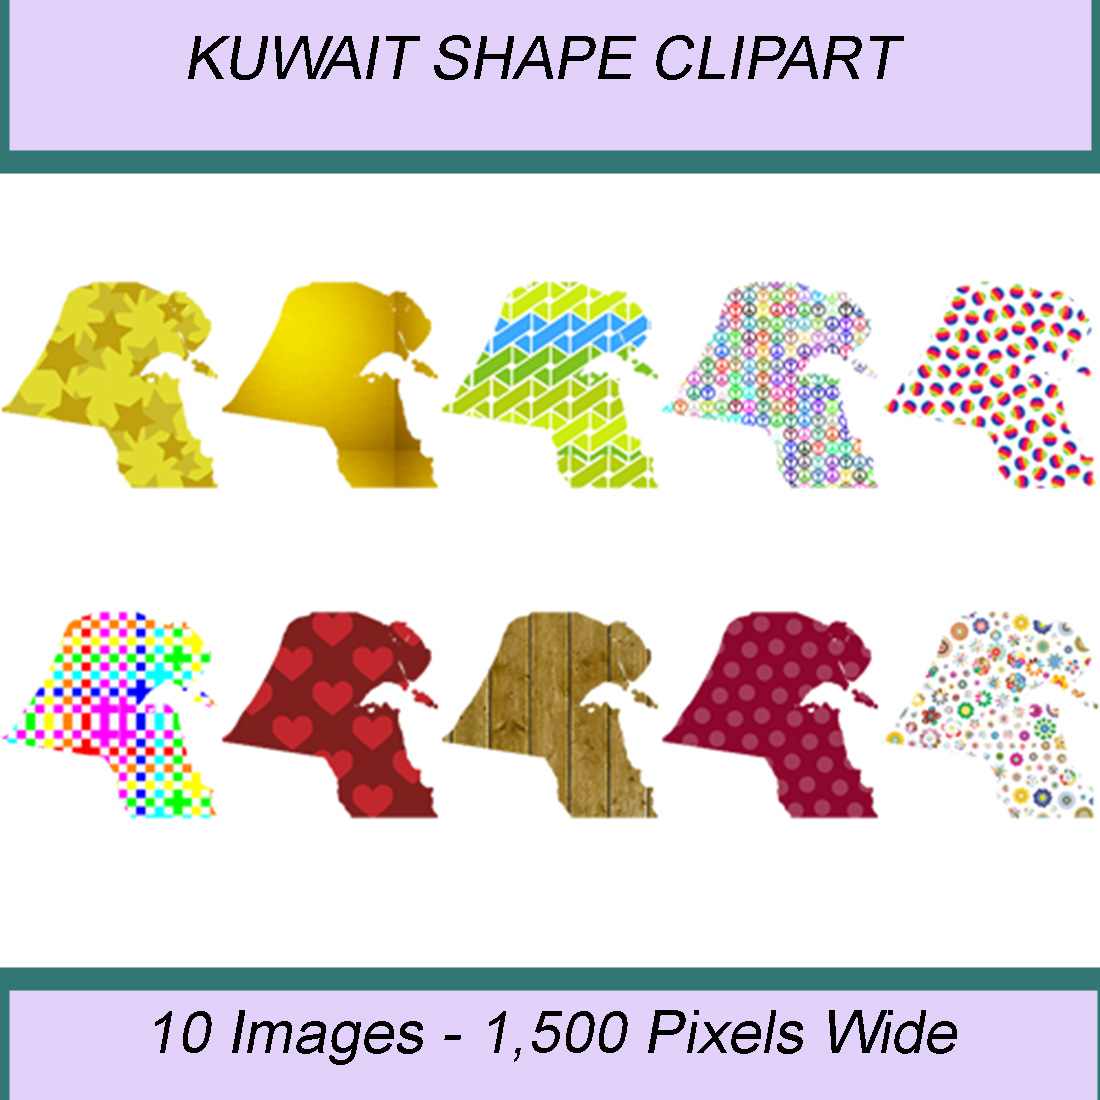 KUWAIT SHAPE CLIPART ICONS cover image.